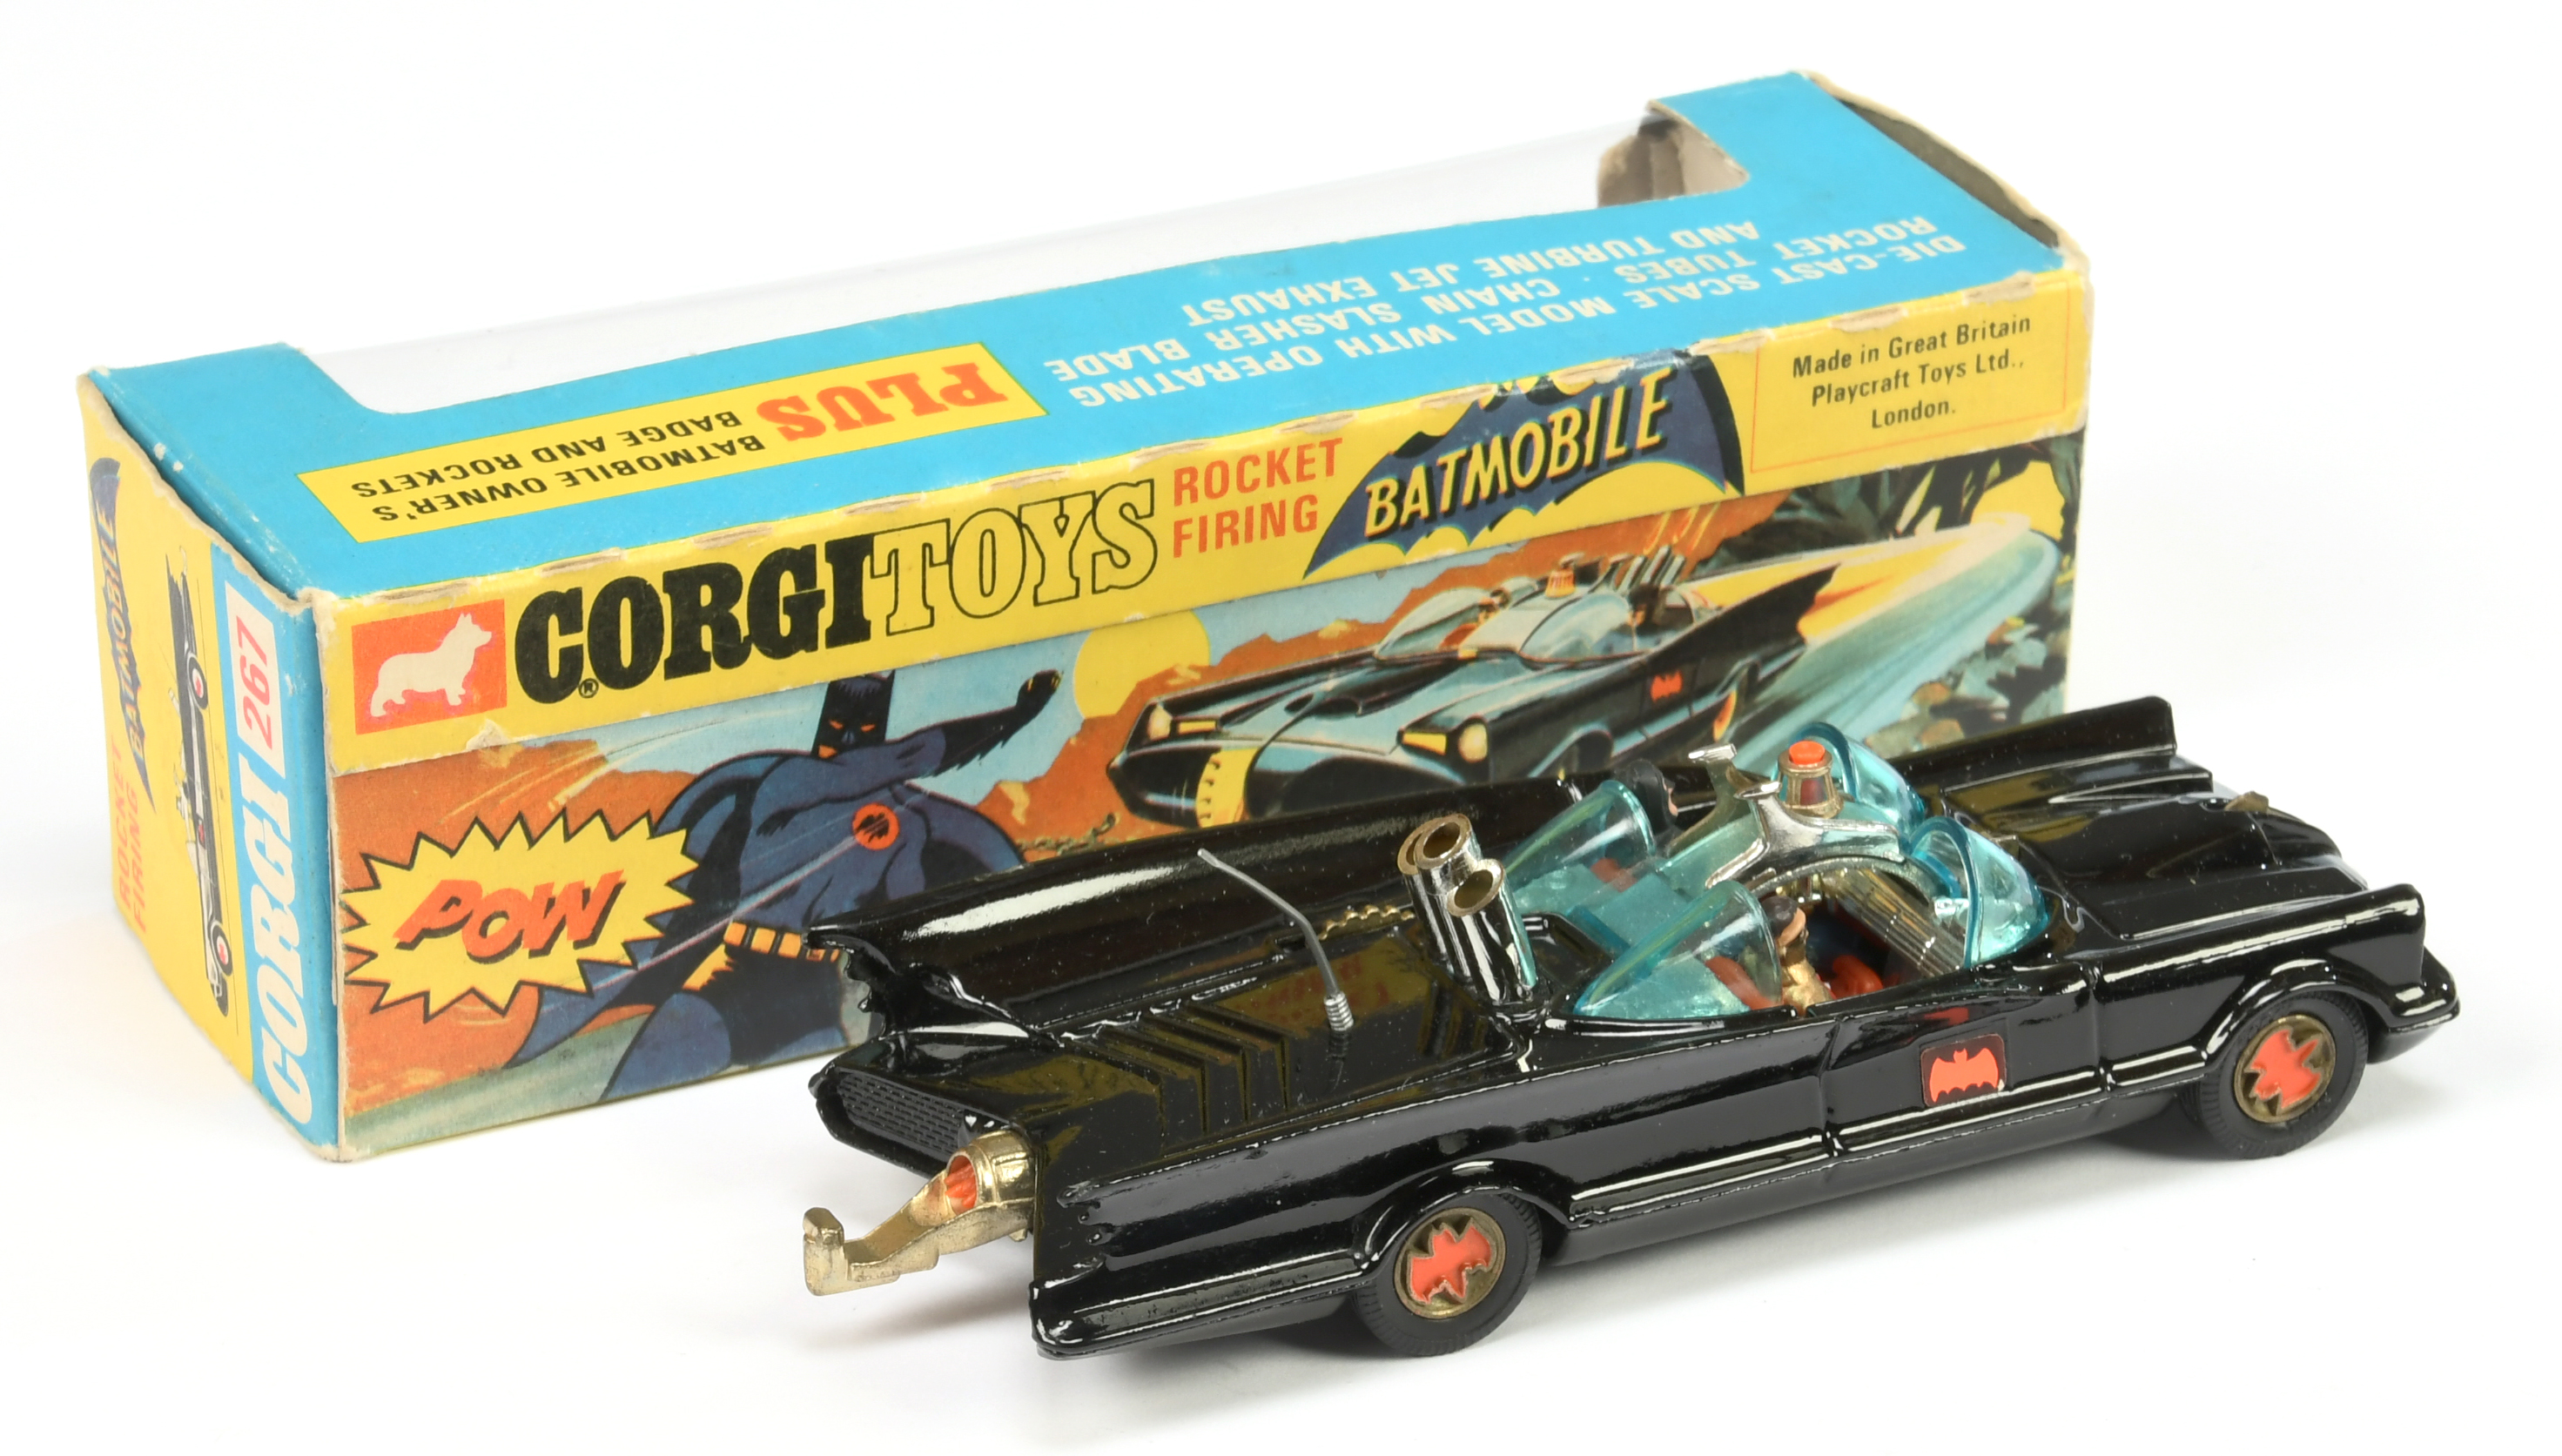 Corgi Toys 267 "Batman" Batmobile - Black body, red bat hubs,blue windows, with "Batman & Robin" ... - Image 2 of 2